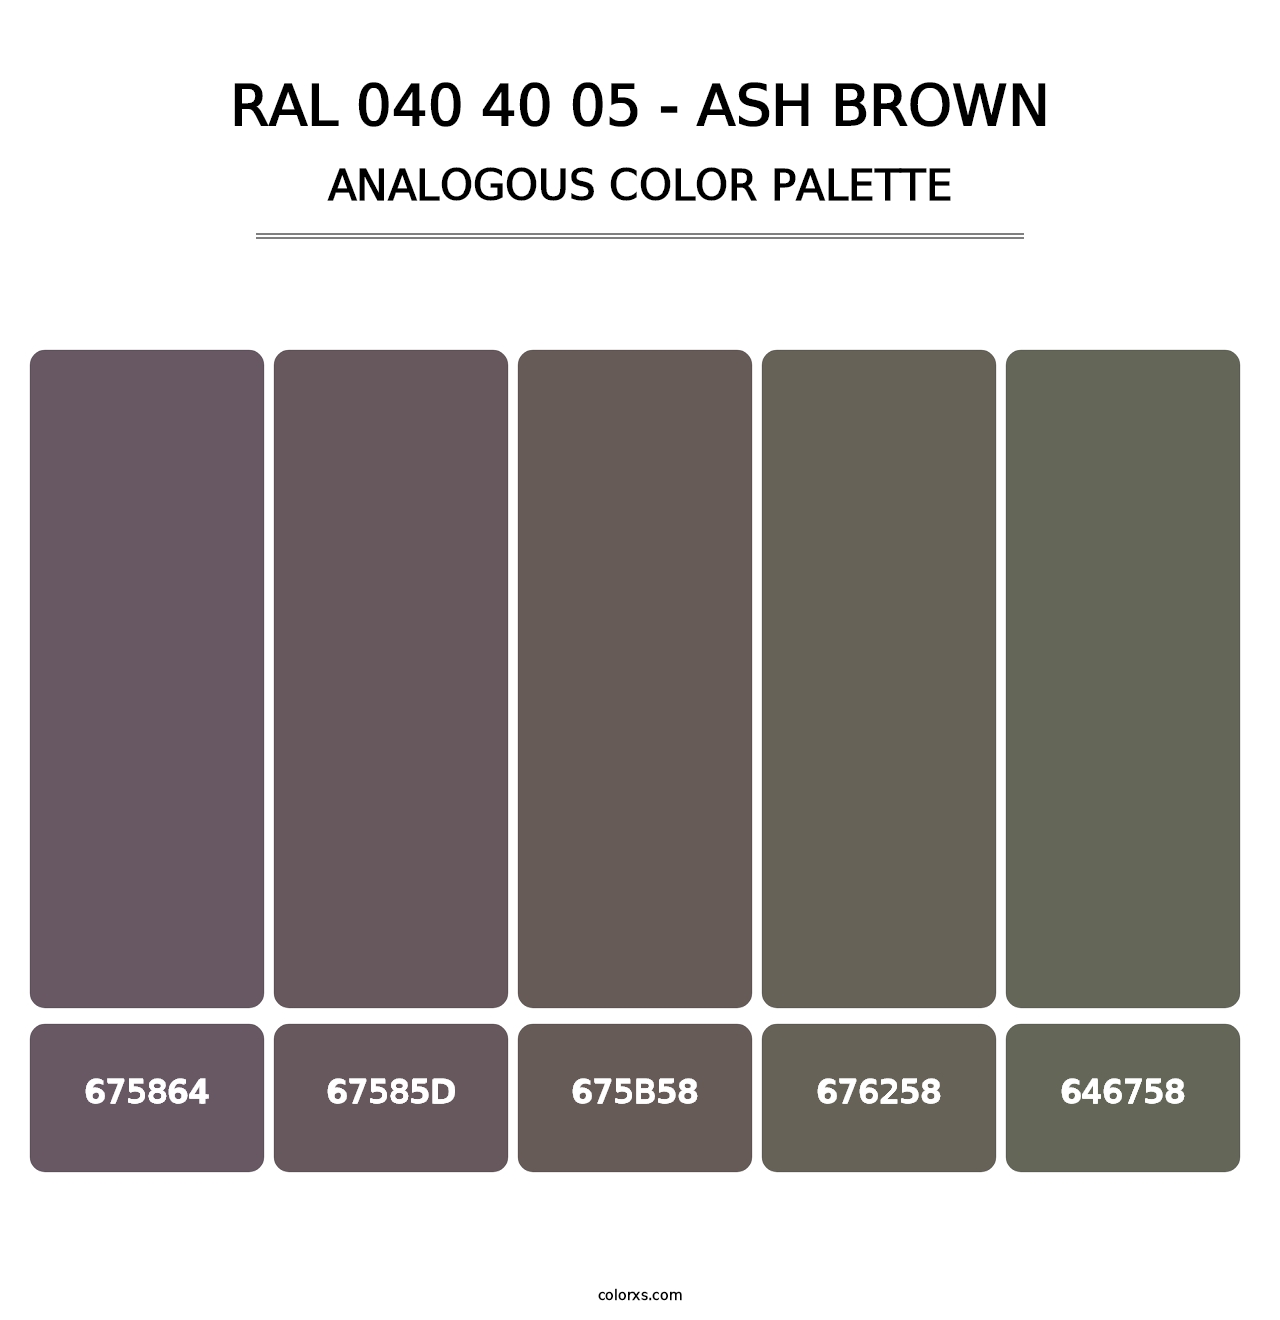 RAL 040 40 05 - Ash Brown - Analogous Color Palette